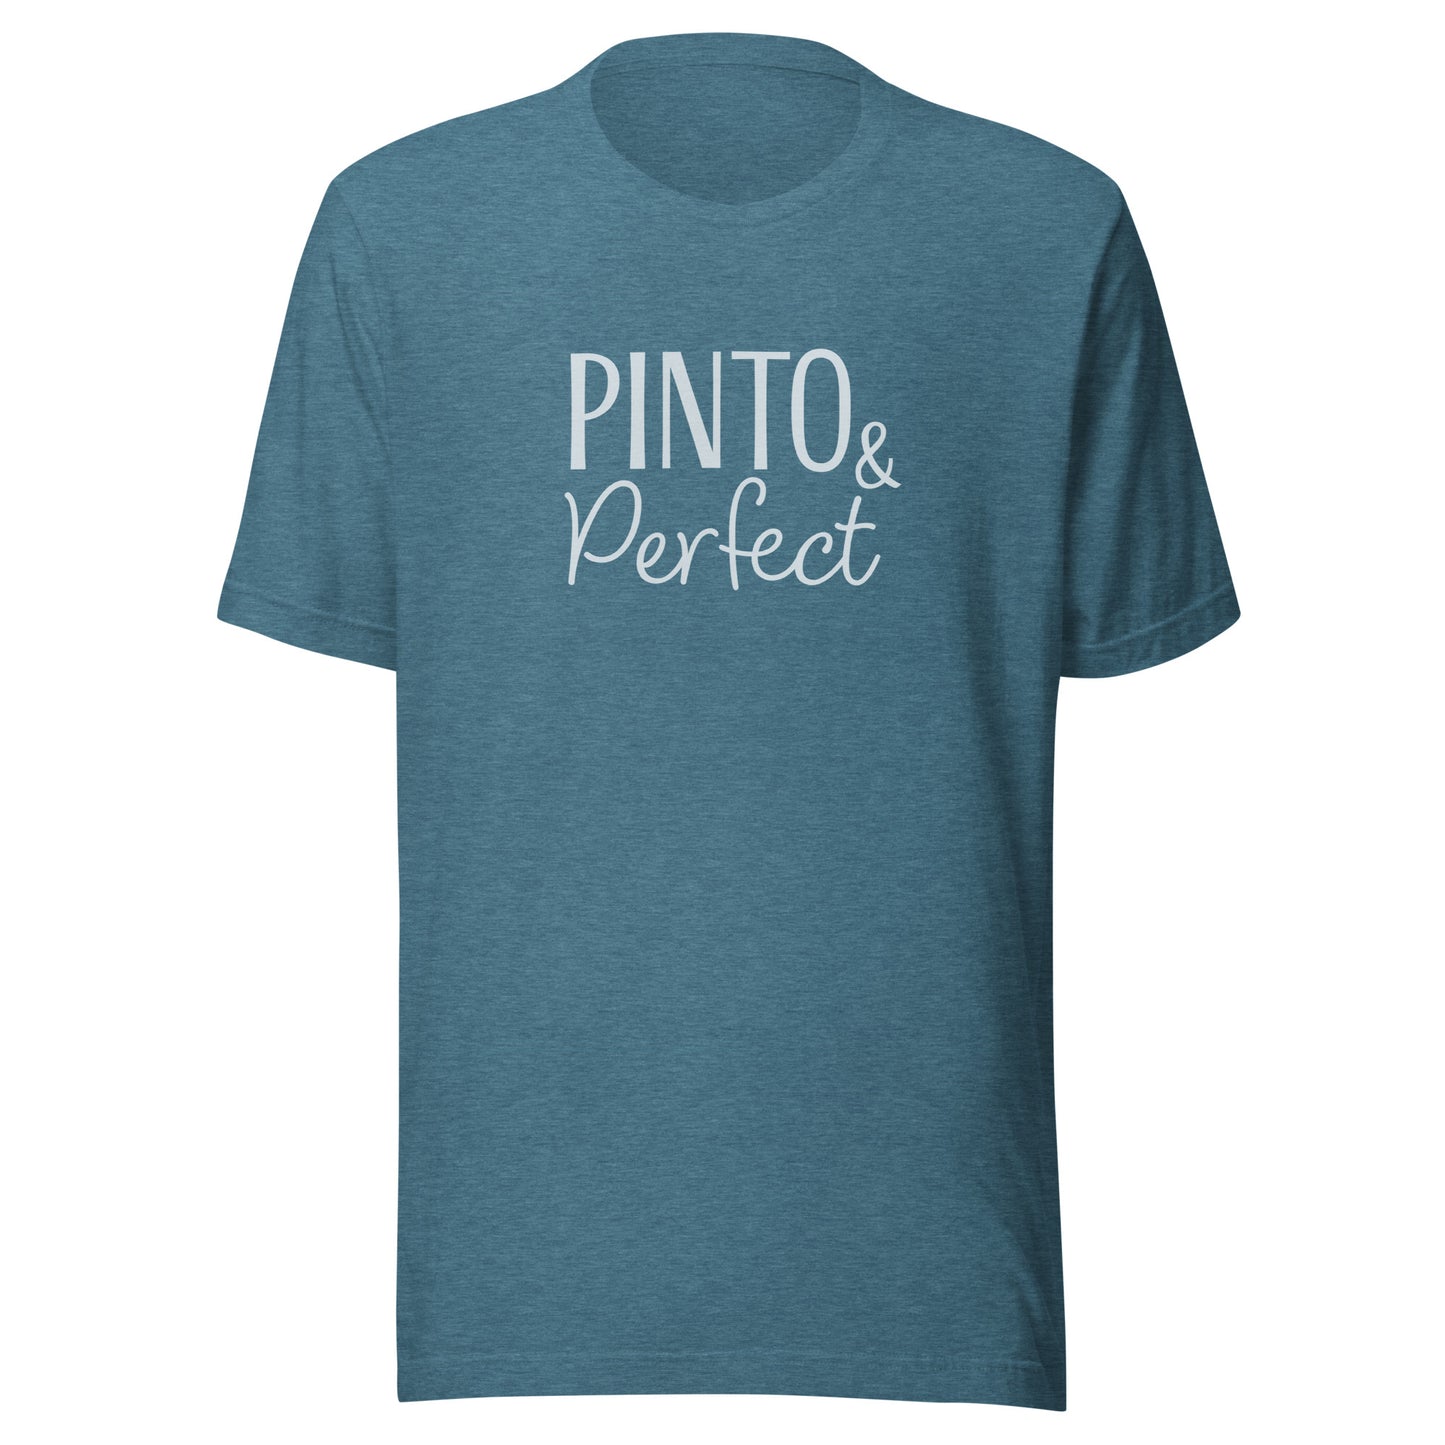 Pinto & Perfect, Equestrian T-shirt